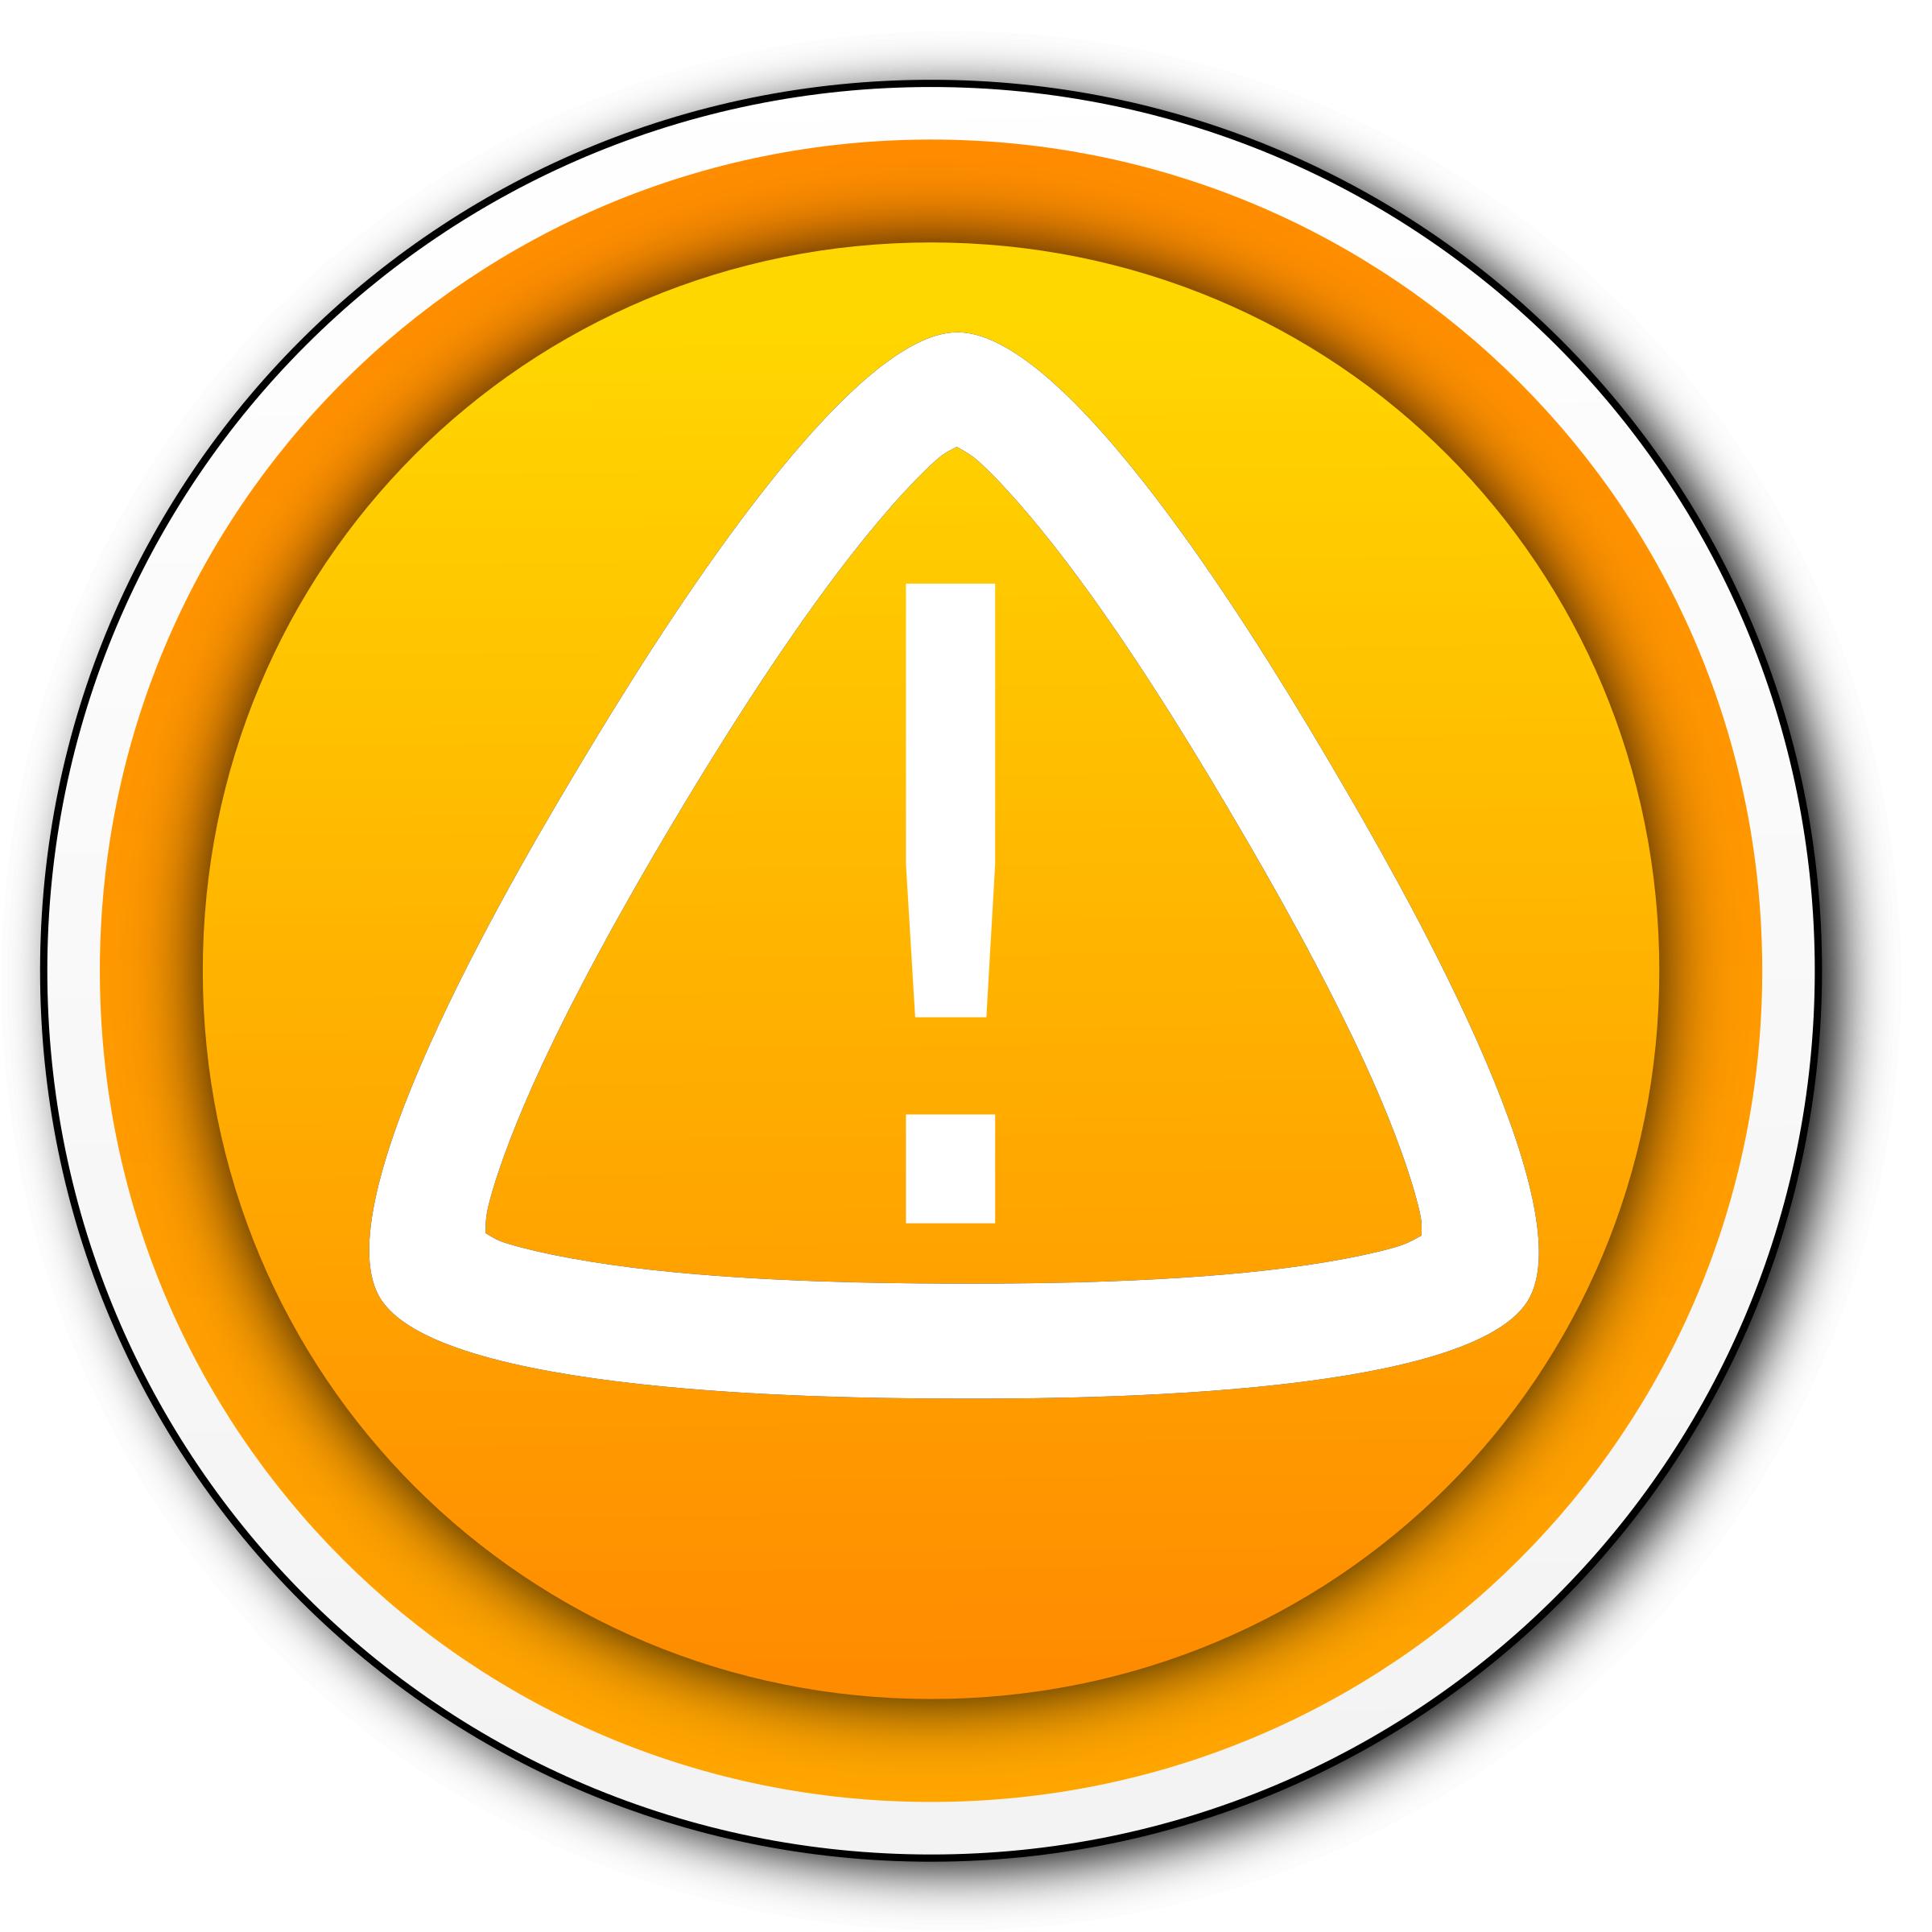 Warning button. Boton advertencia PNG icons